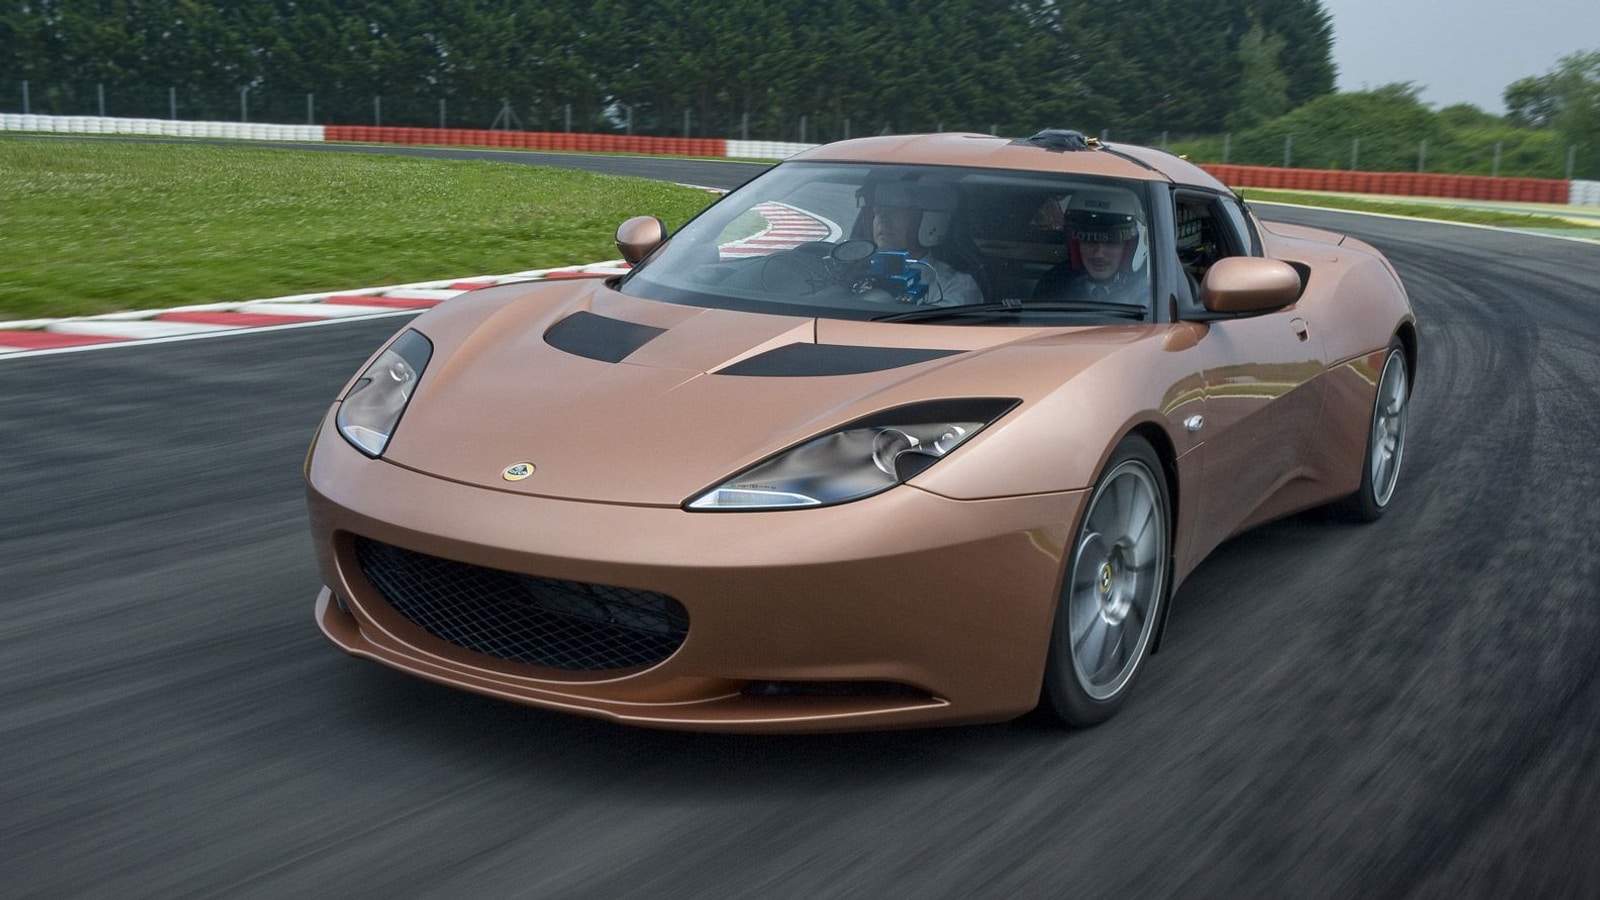 Lotus Evora 414E extended-range electric car prototype